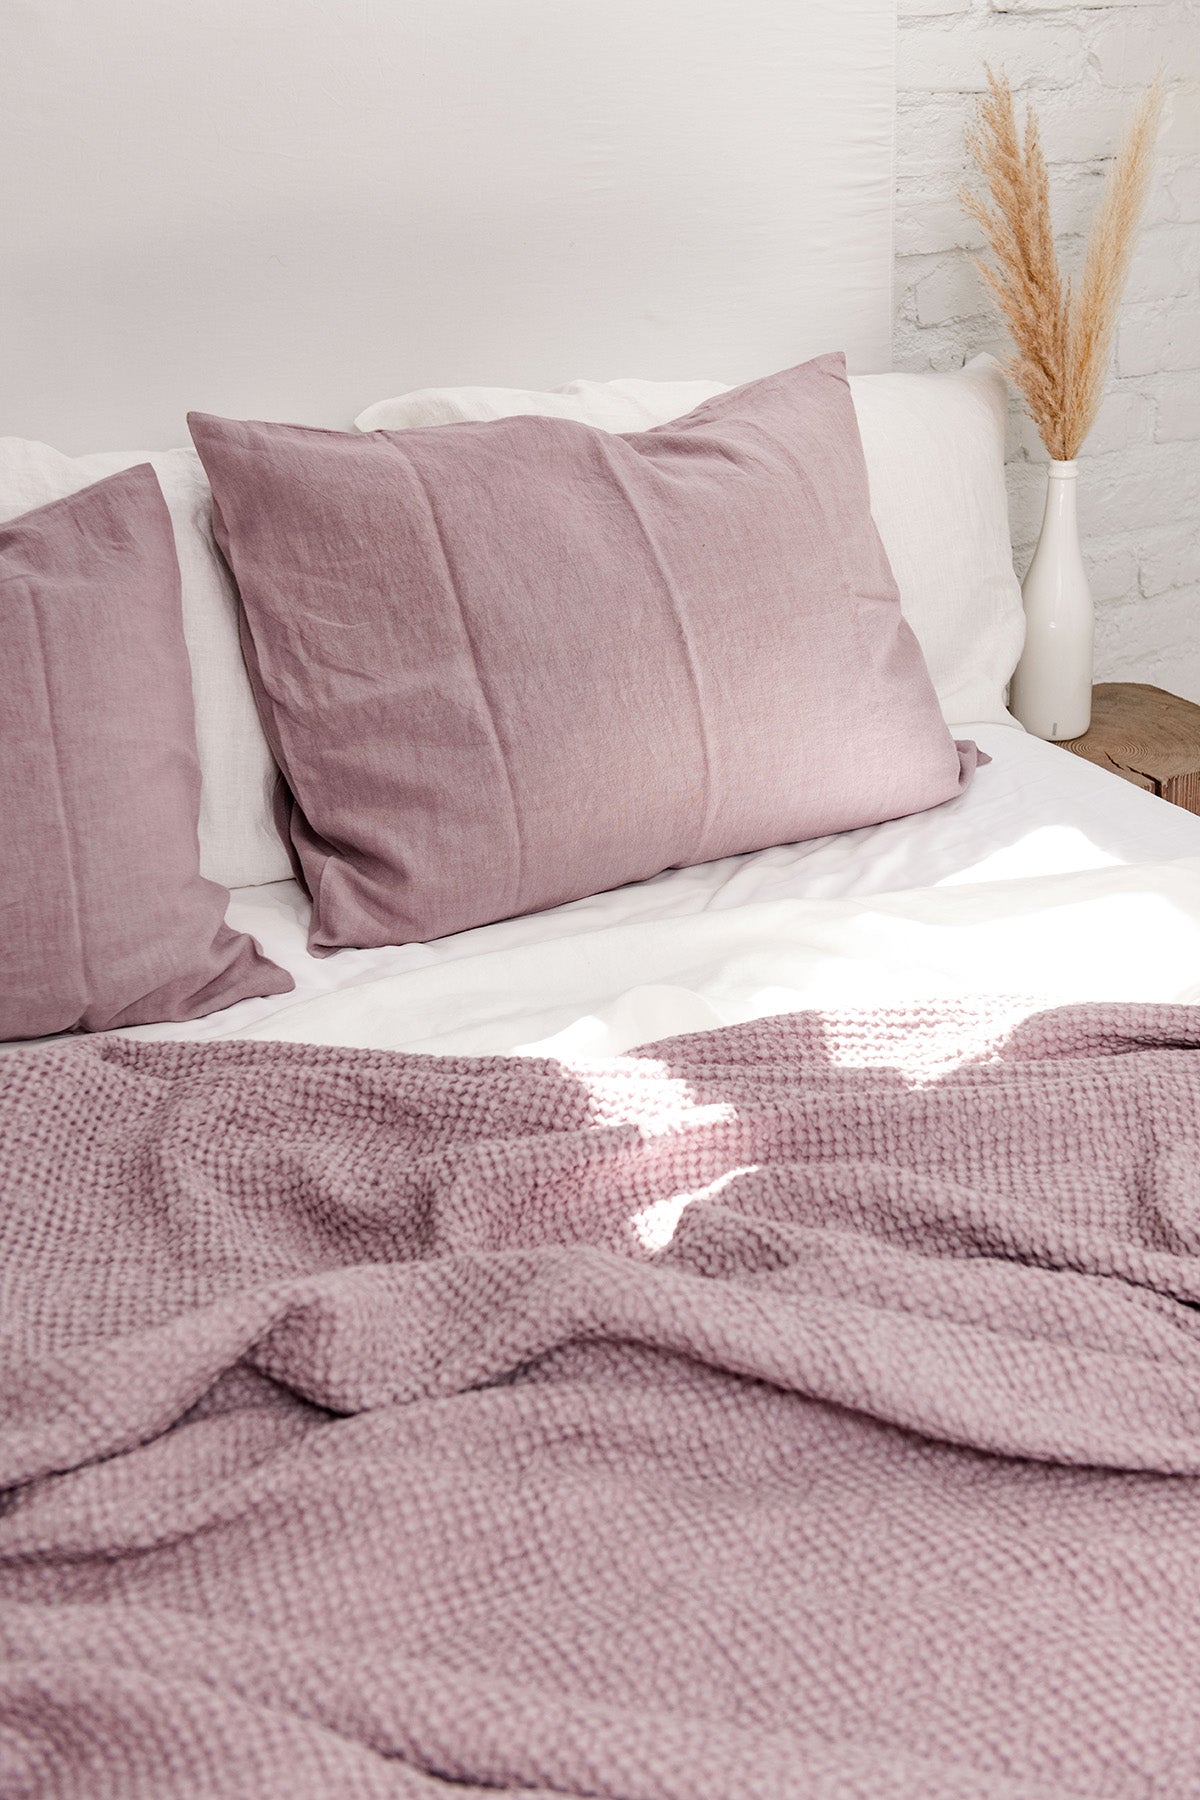 Dusty Rose LInen Pillowcase On Bed By AmourlInen